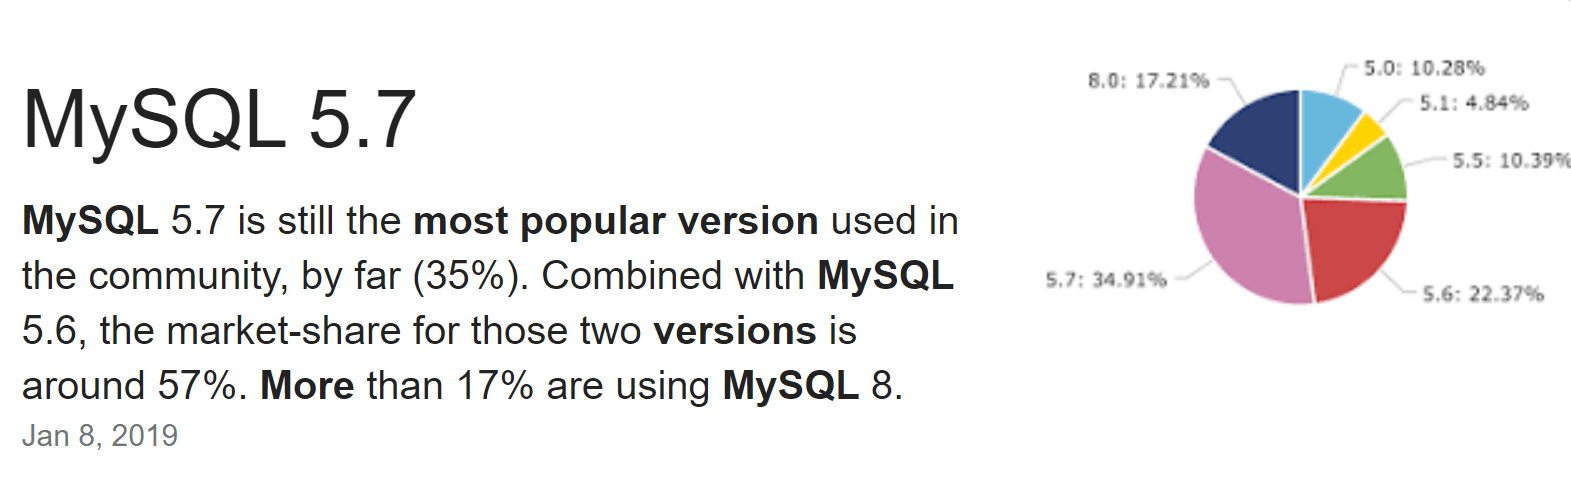 Configuration de MySQL 5.7